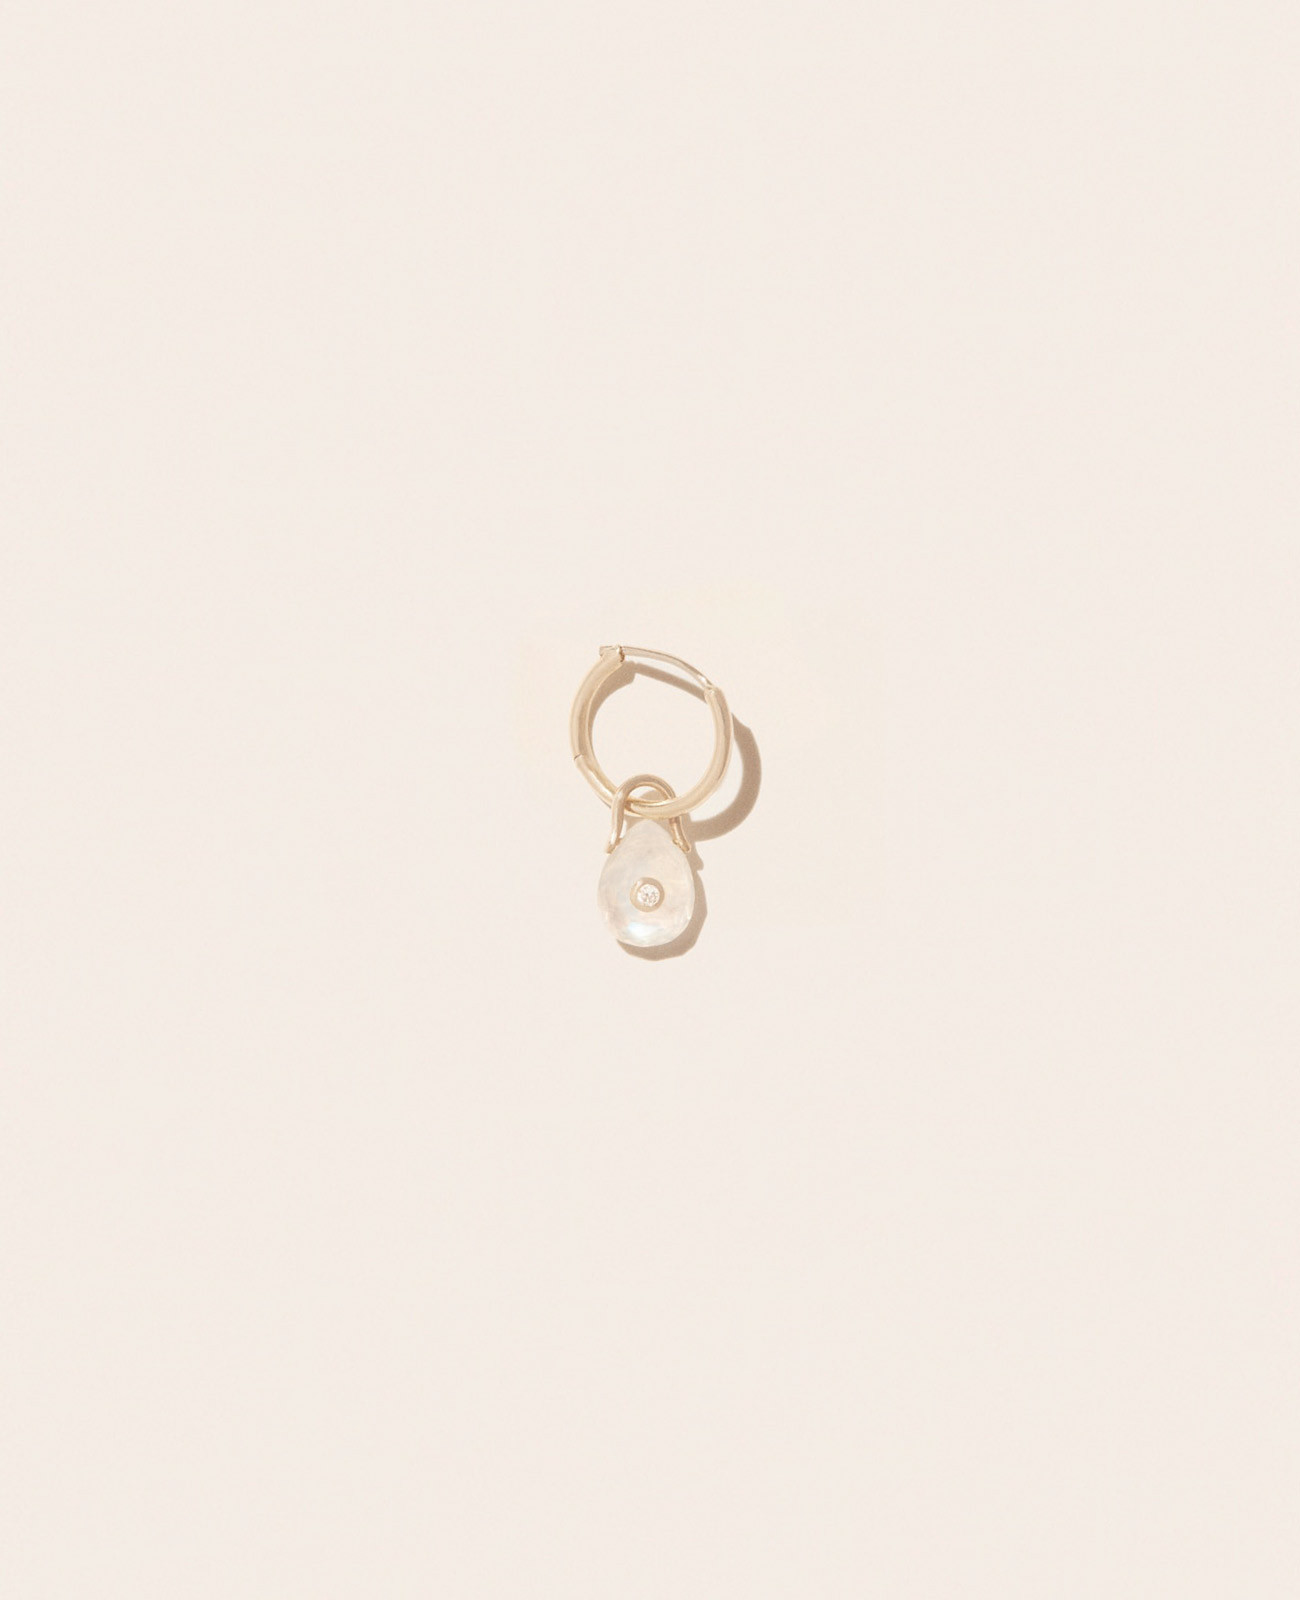 ORSO MOONSTONE earring pascale monvoisin jewelry paris